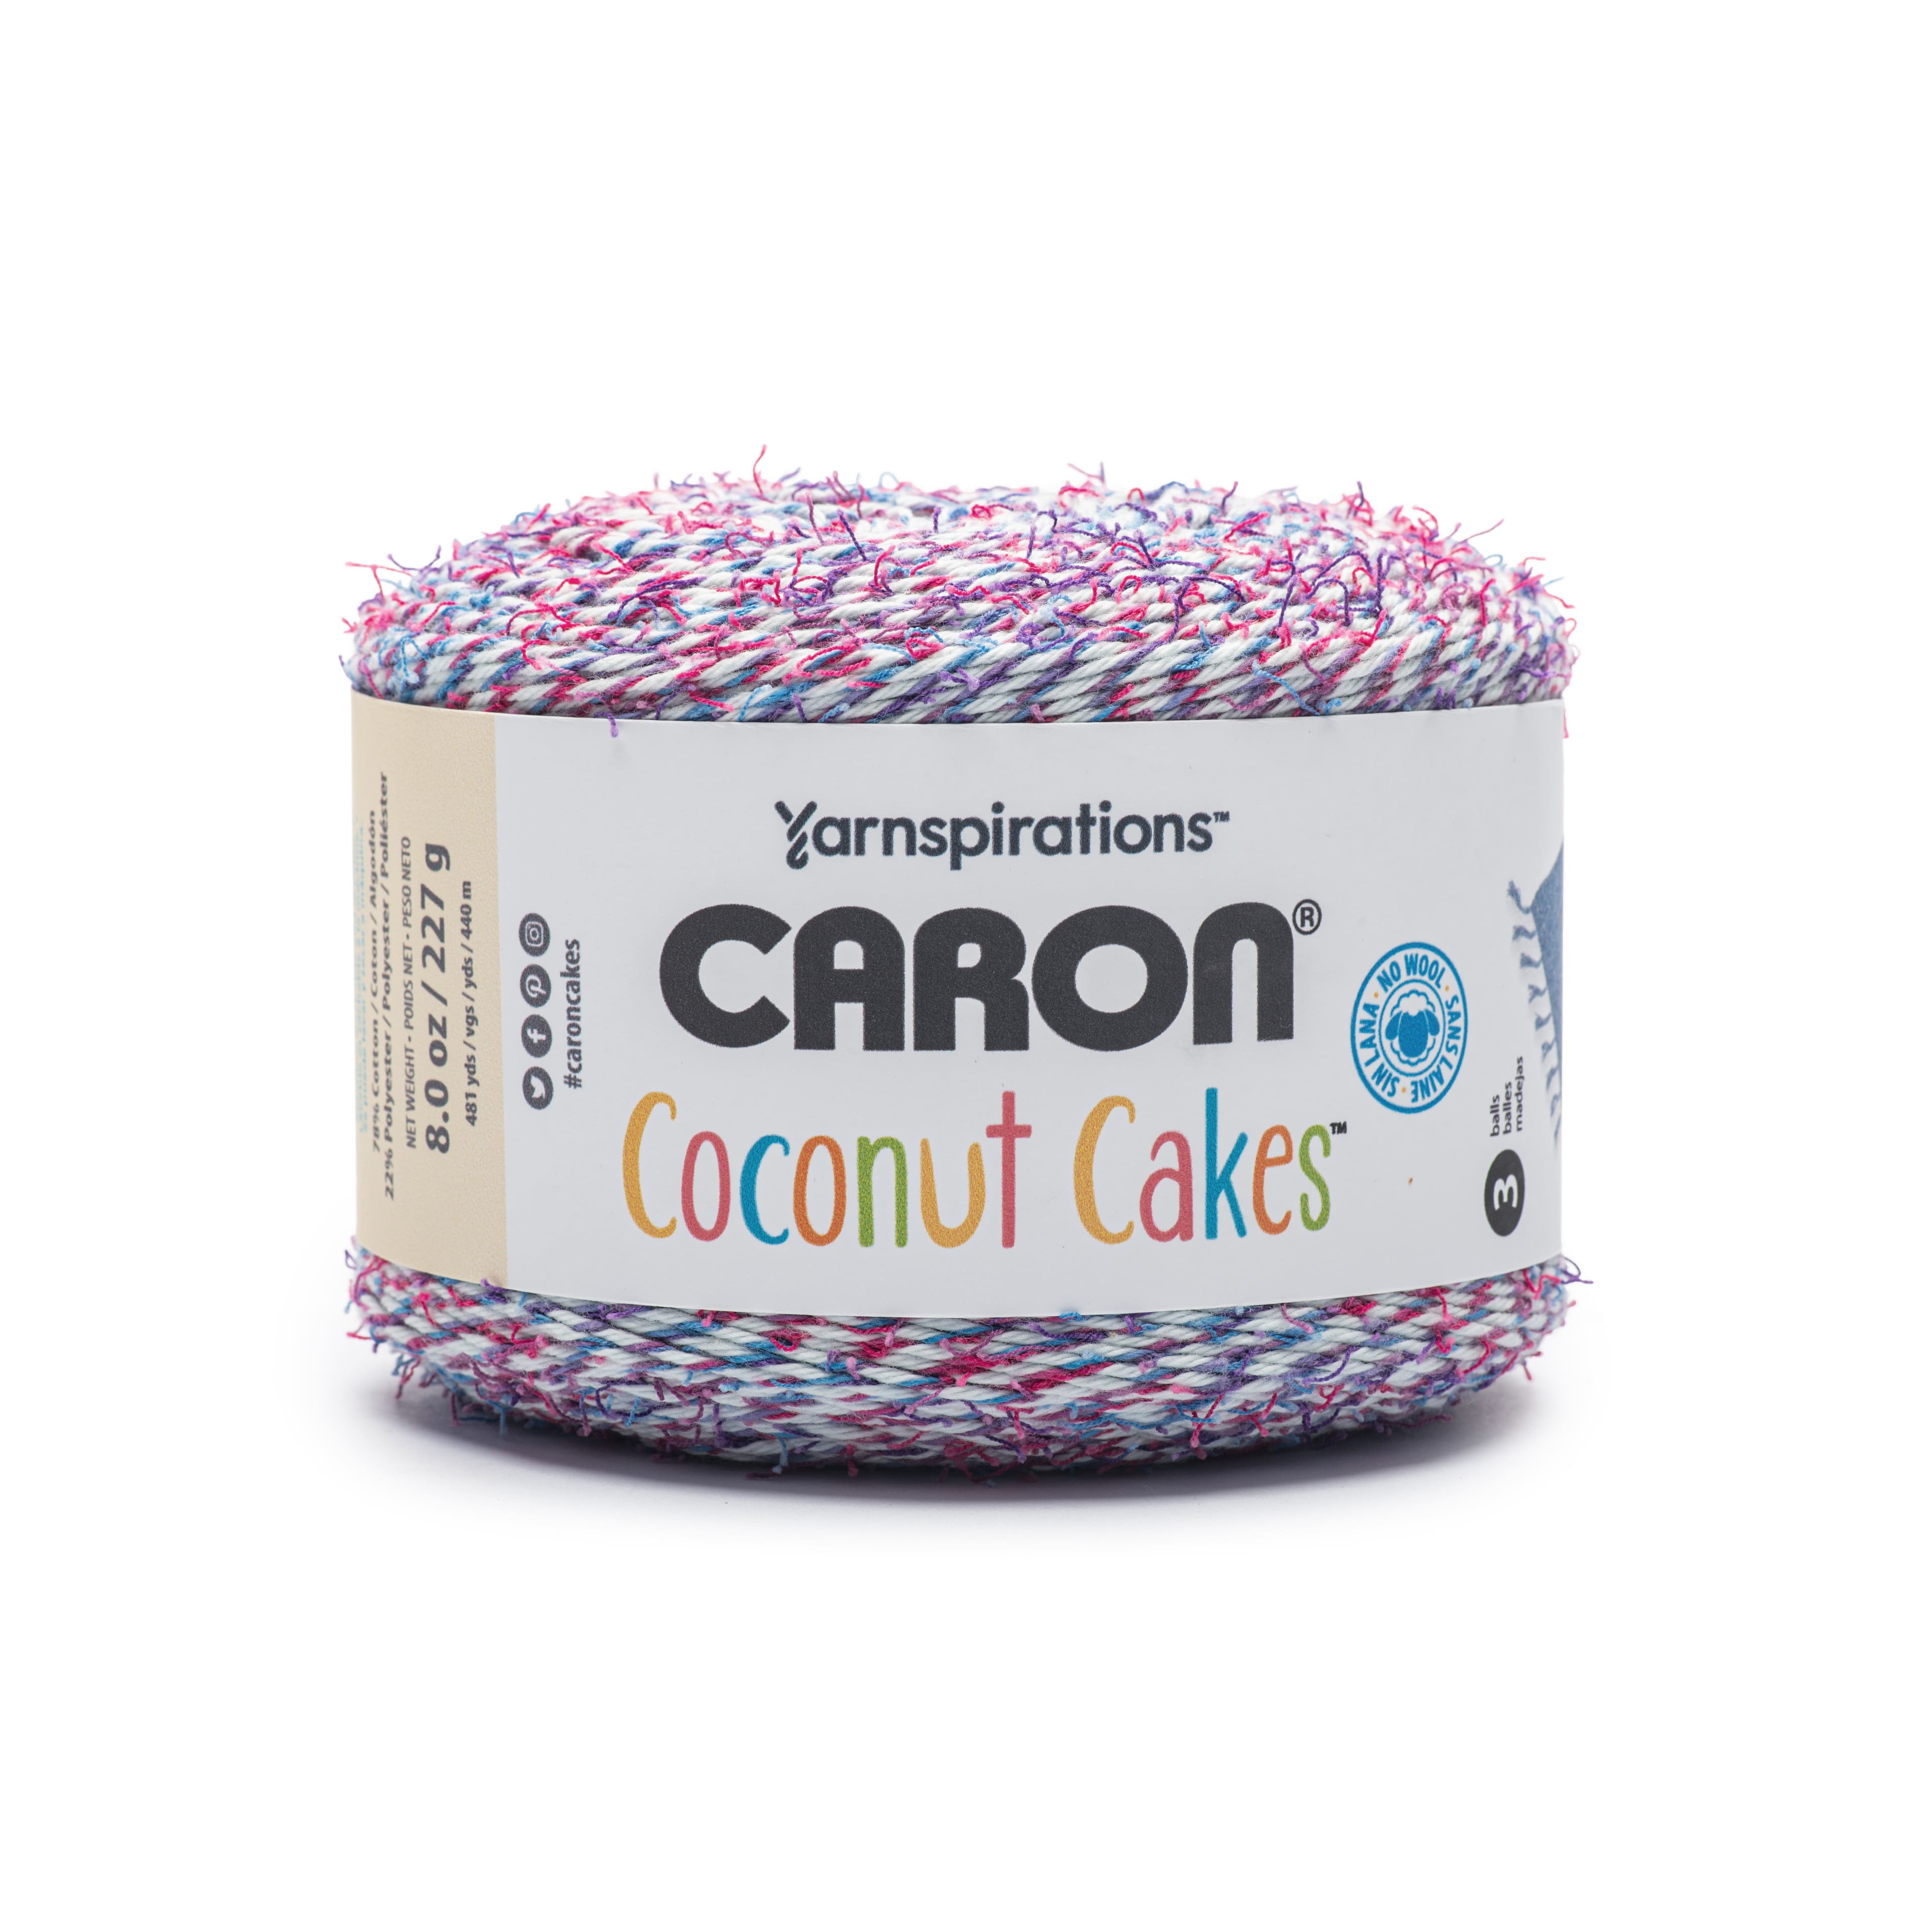 Caron Cloud Cakes Yarn in Royal Treatment | 8.5 oz | Michaels